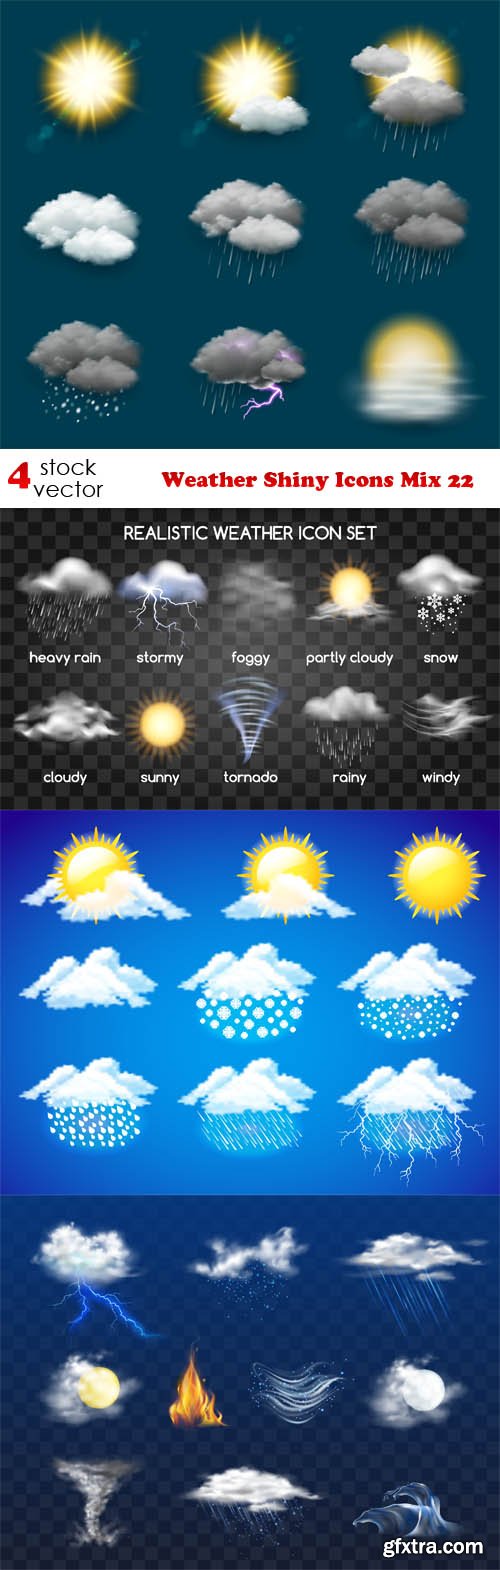 Vectors - Weather Shiny Icons Mix 22